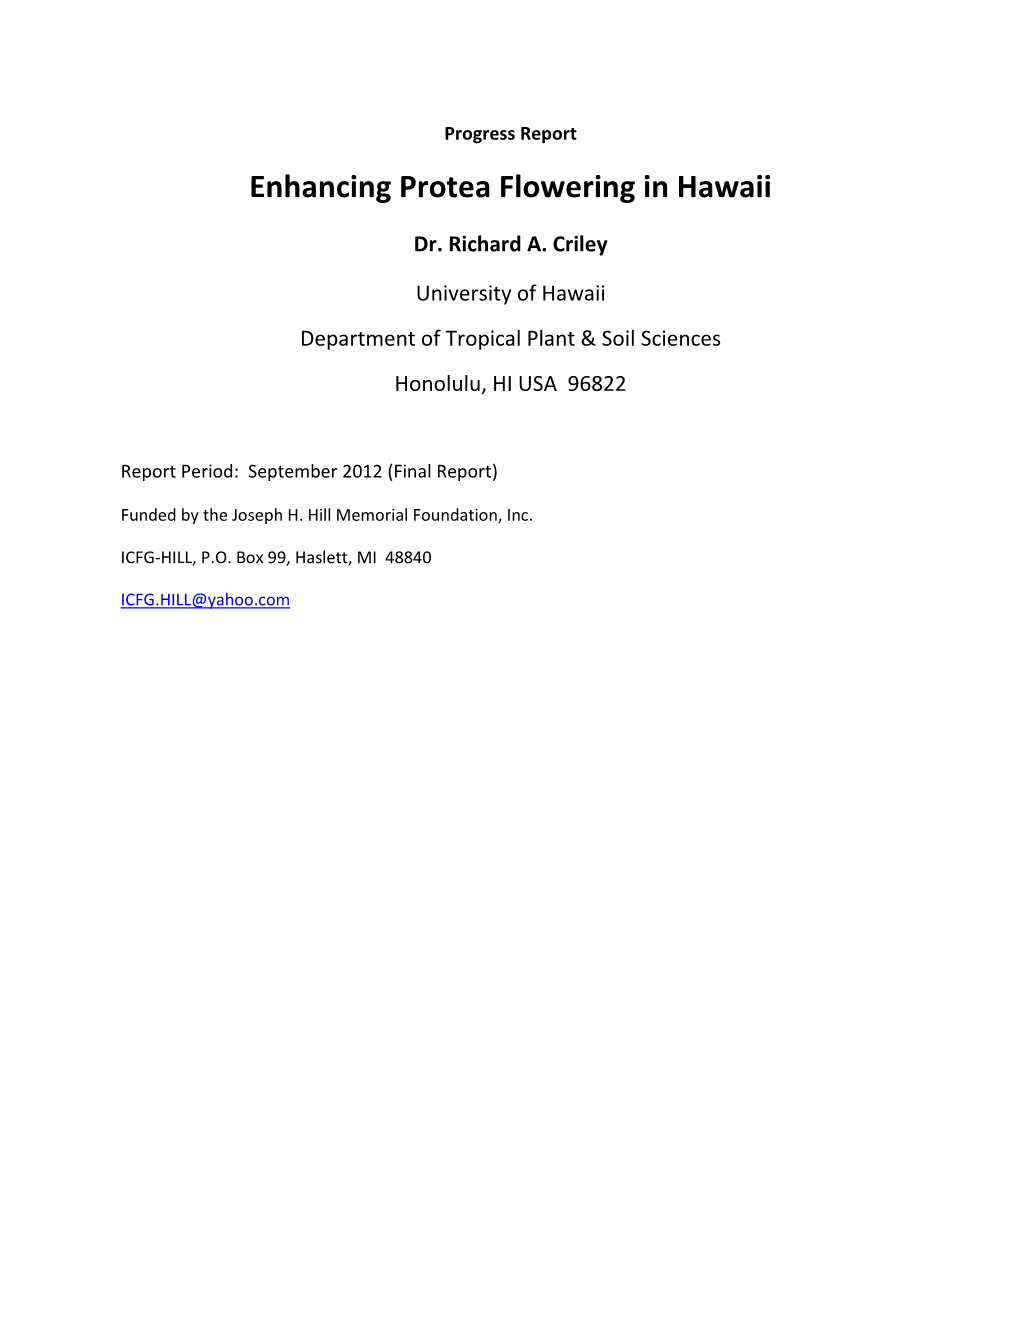 Enhancing Protea Flowering in Hawaii